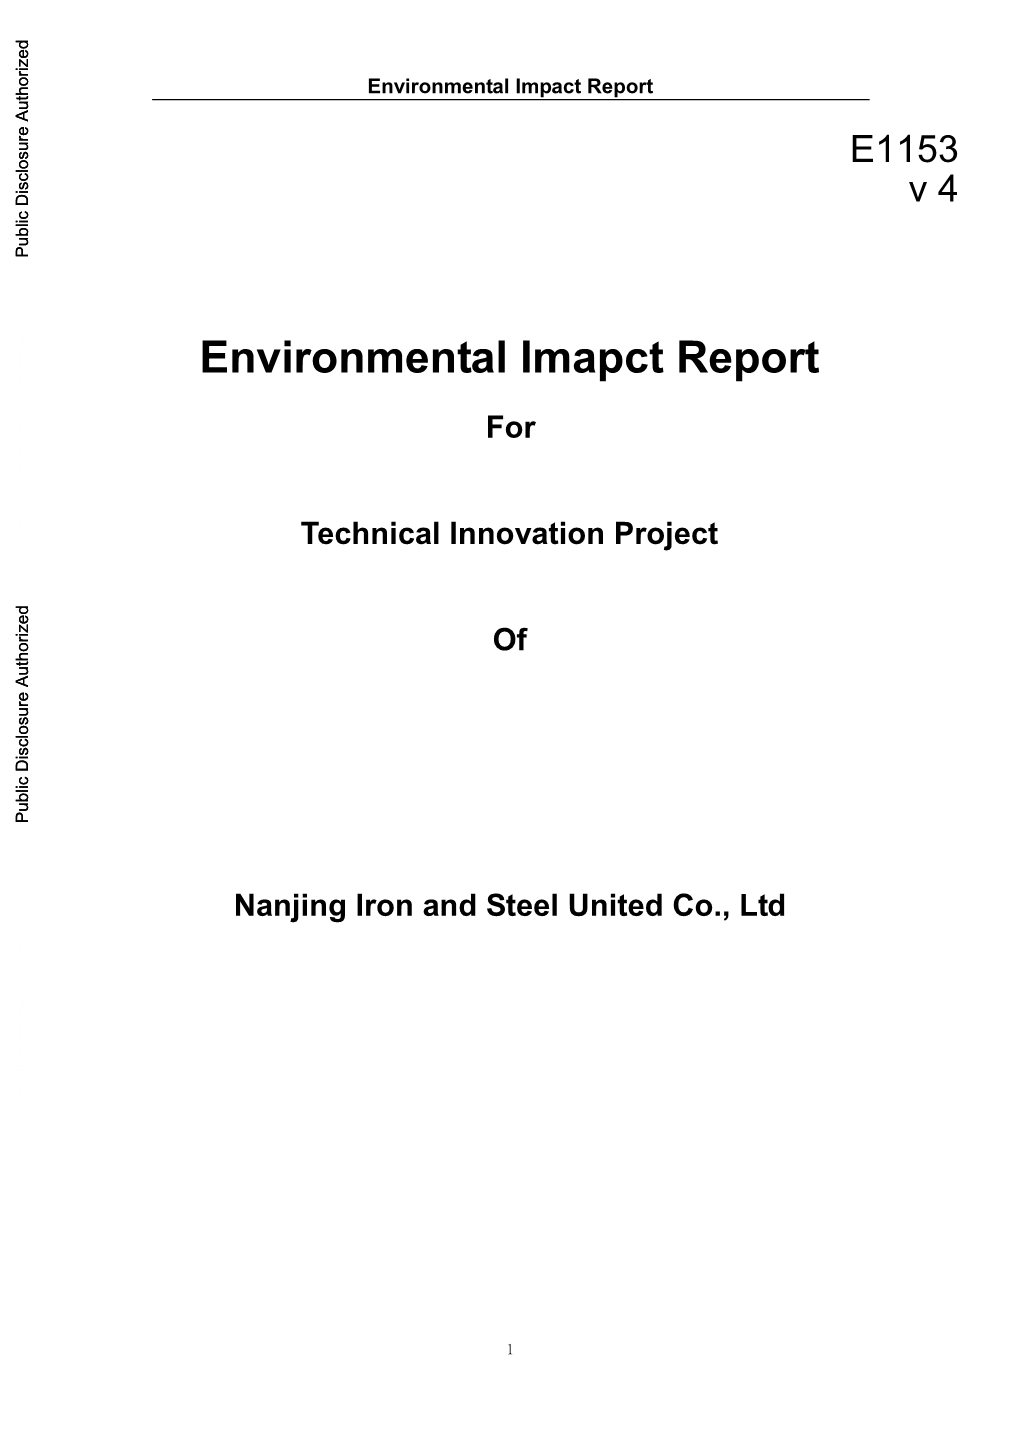 Environmental Imapct Report for Technical